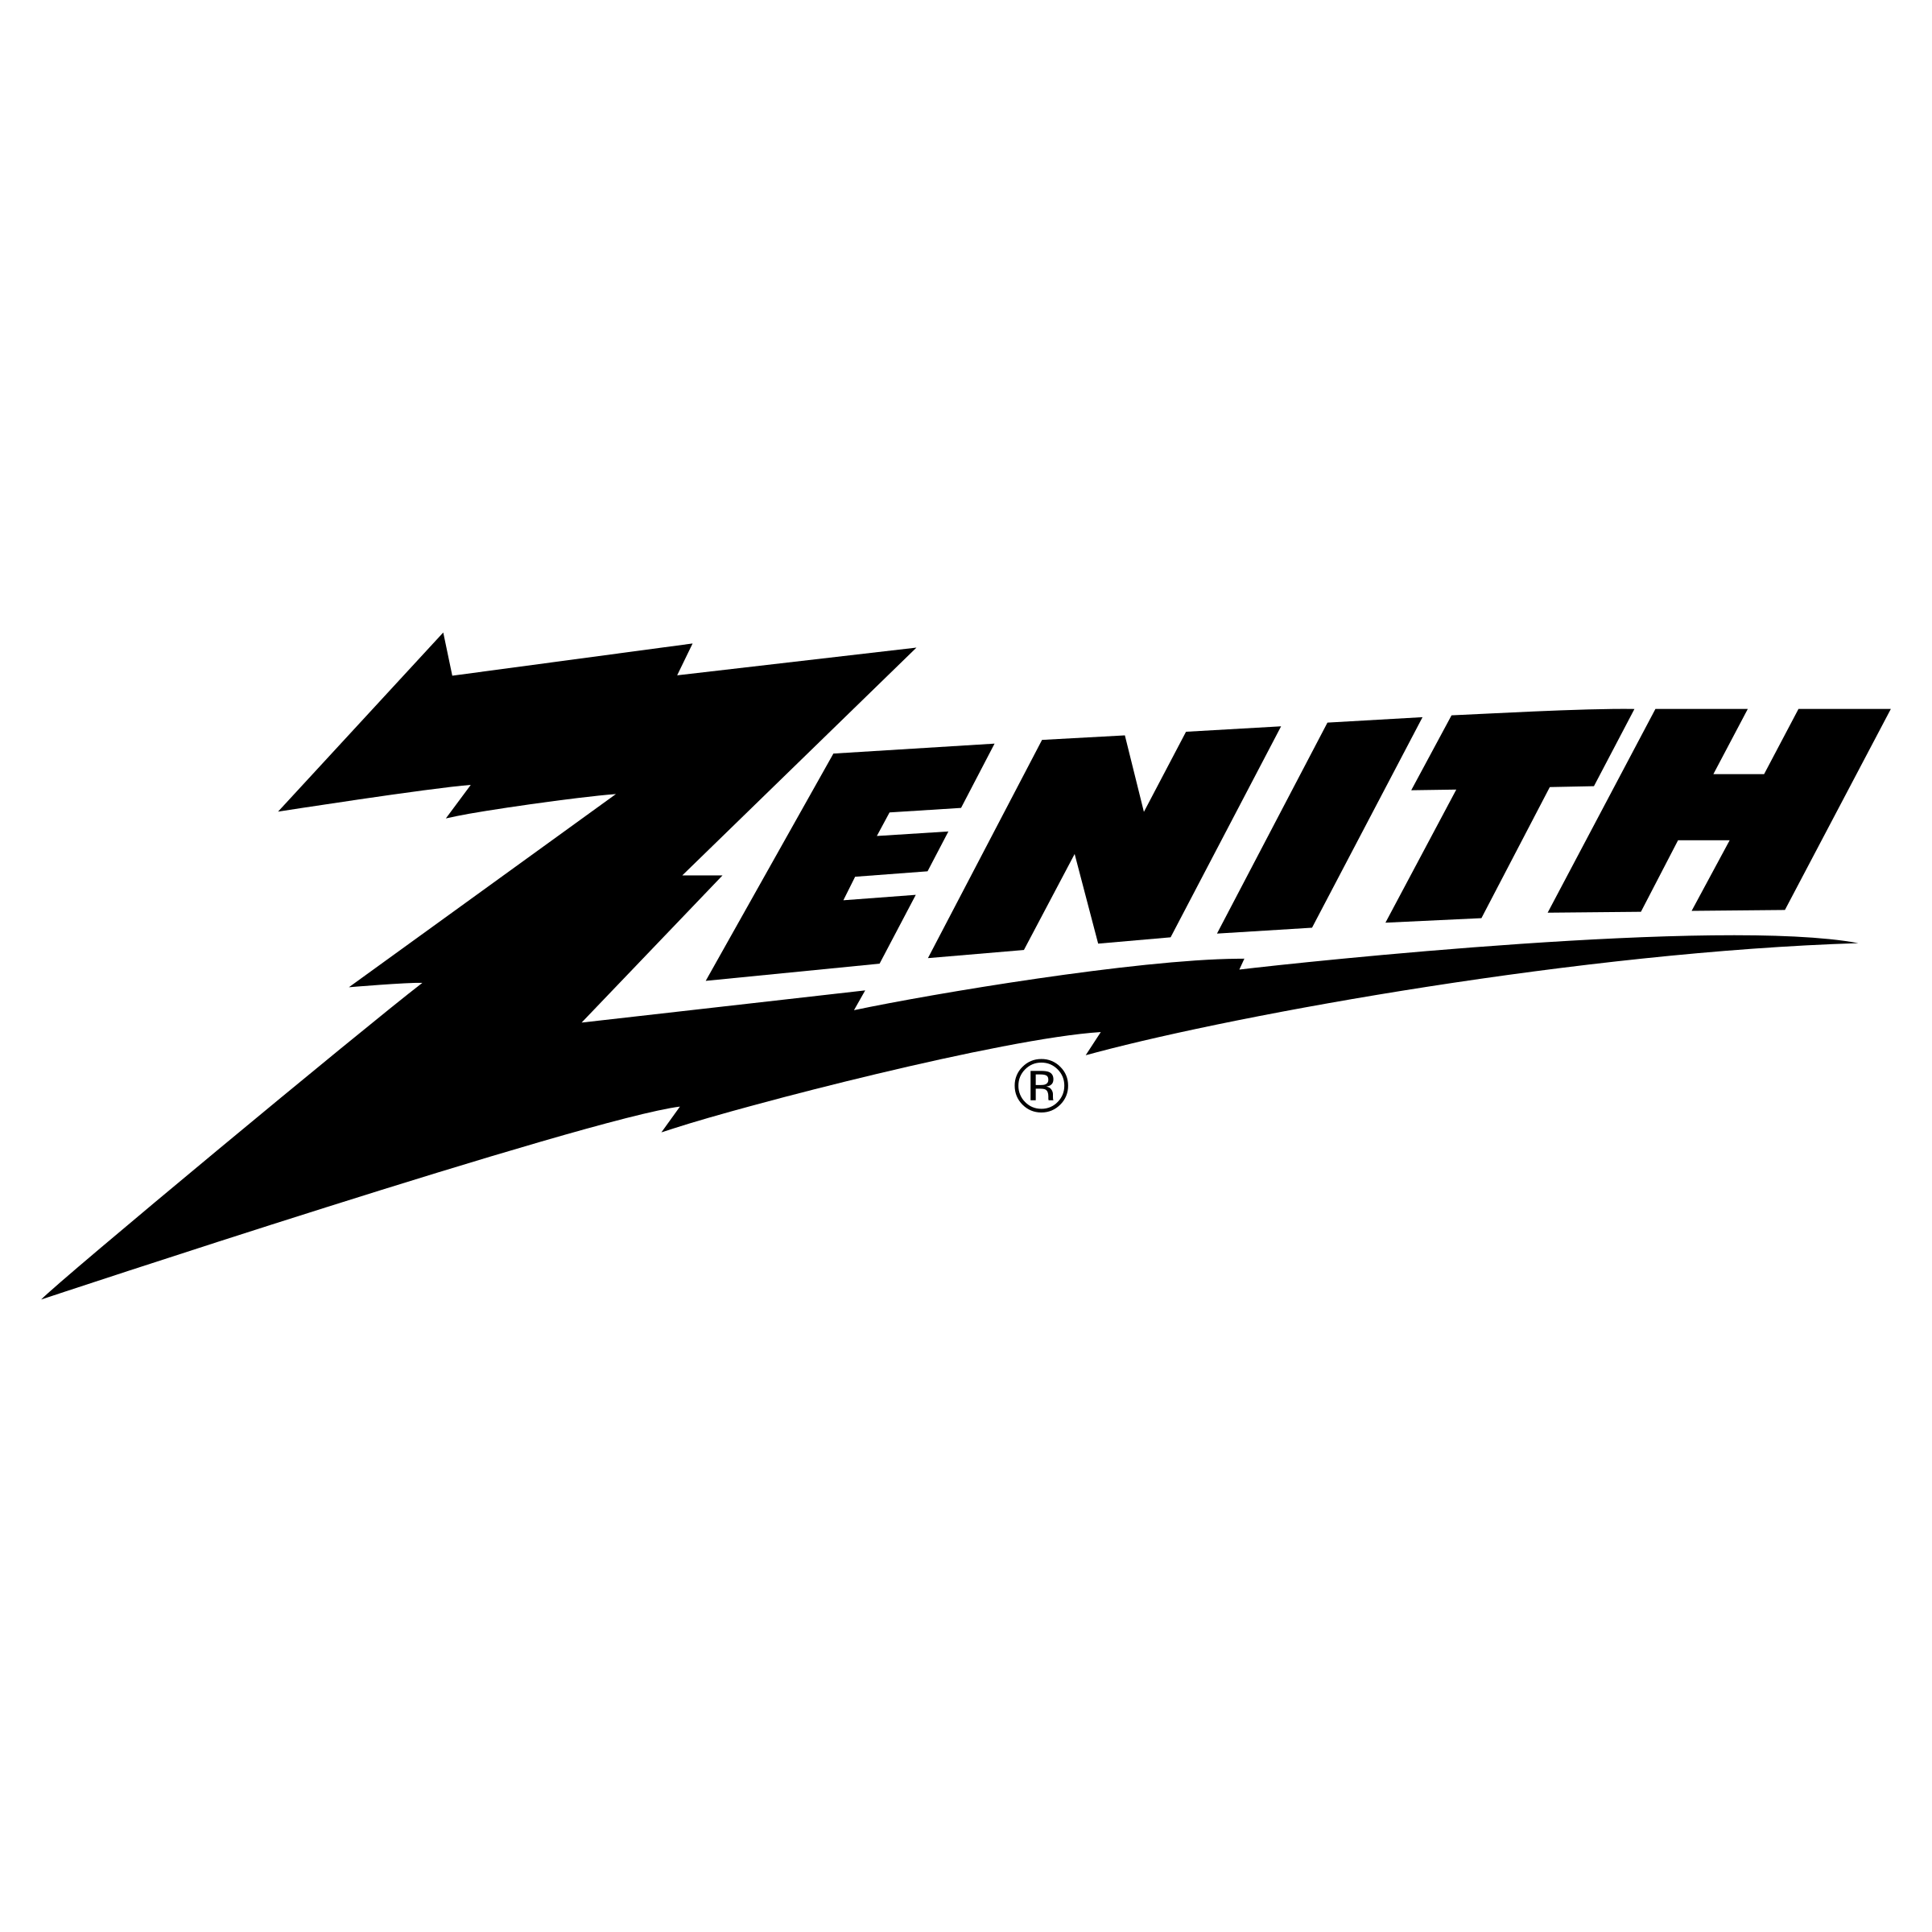 Zenith Logo PNG Transparent & SVG Vector.